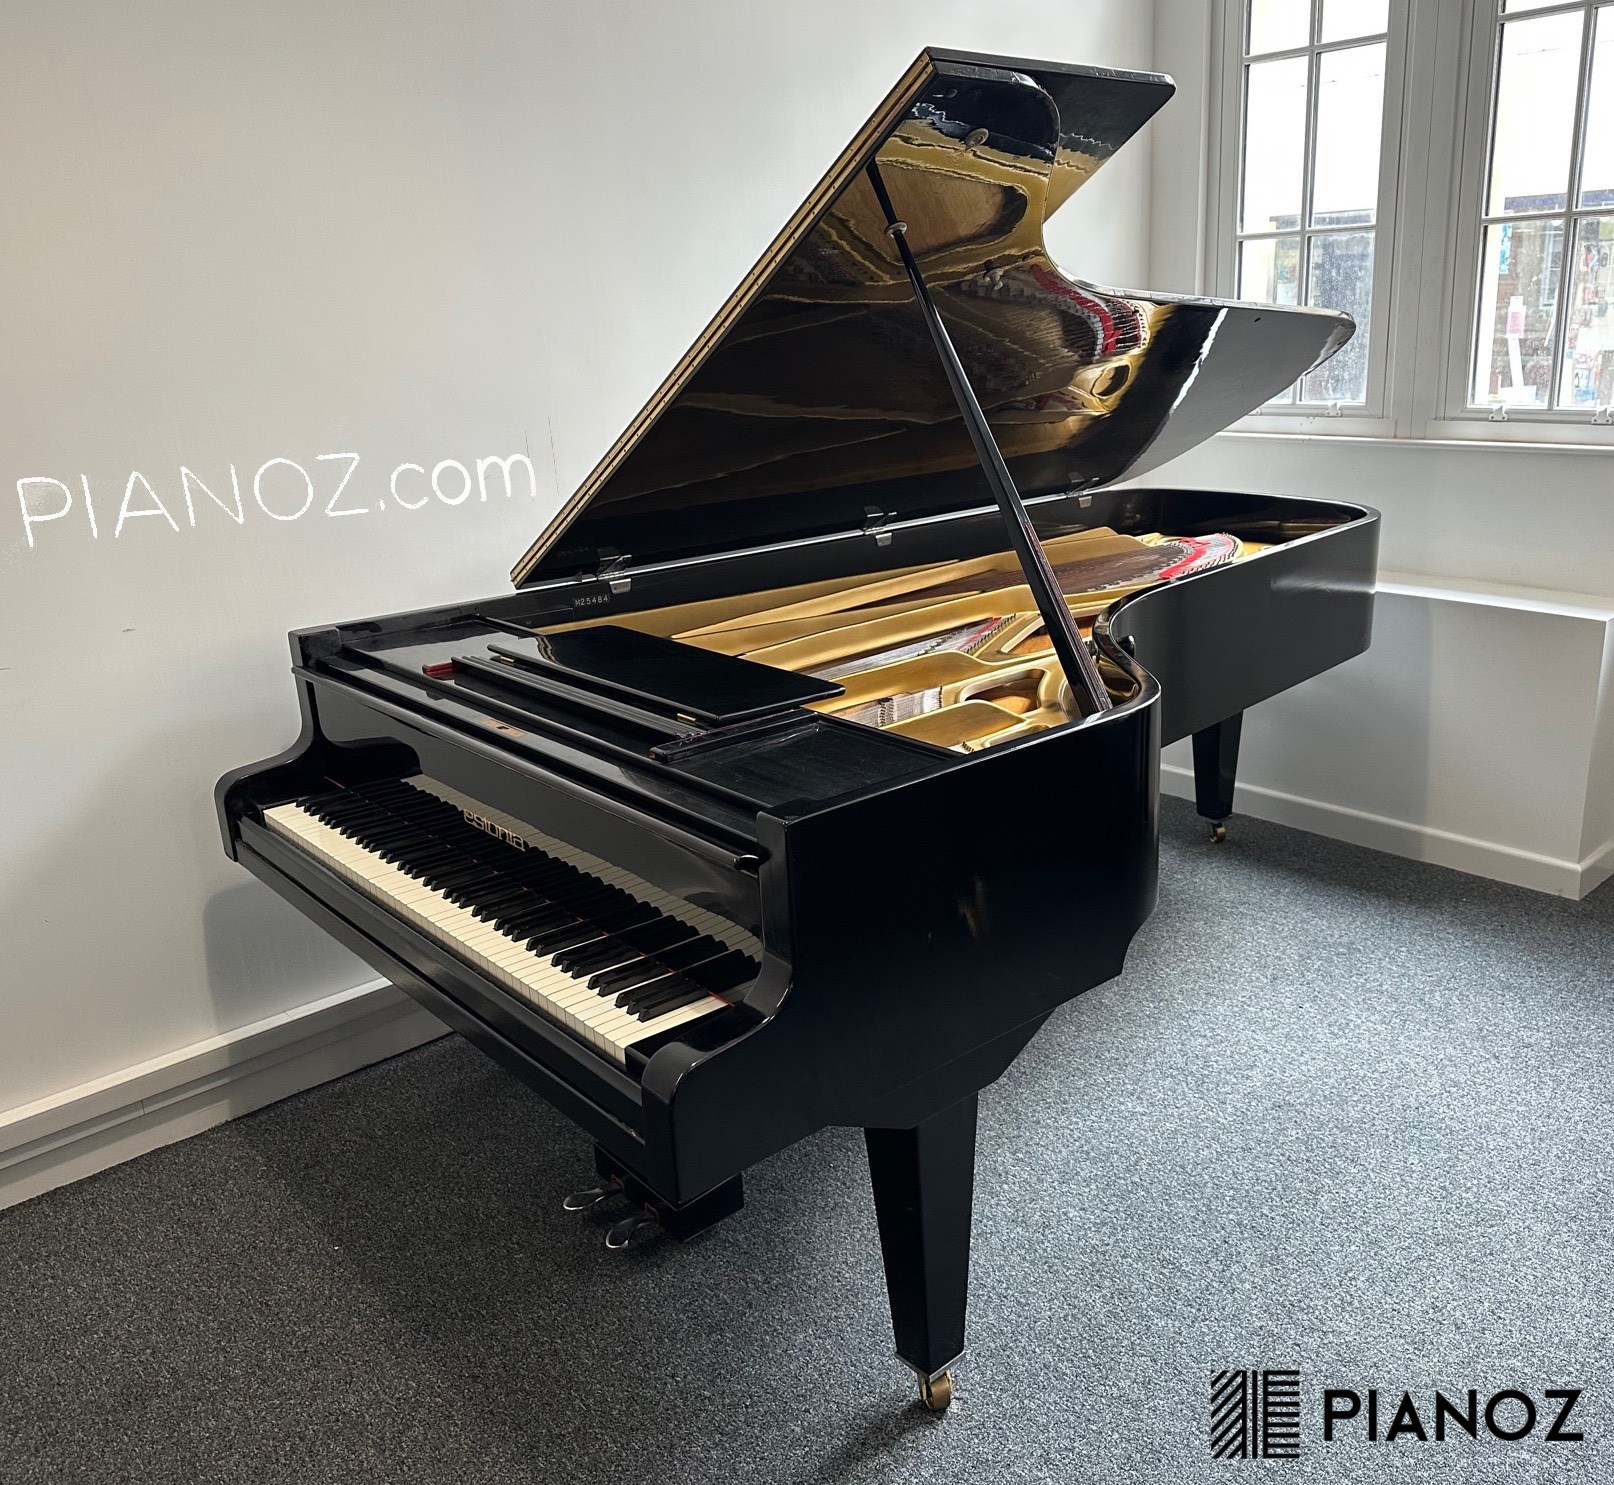 Estonia 9ft Concert Grand piano for sale in UK